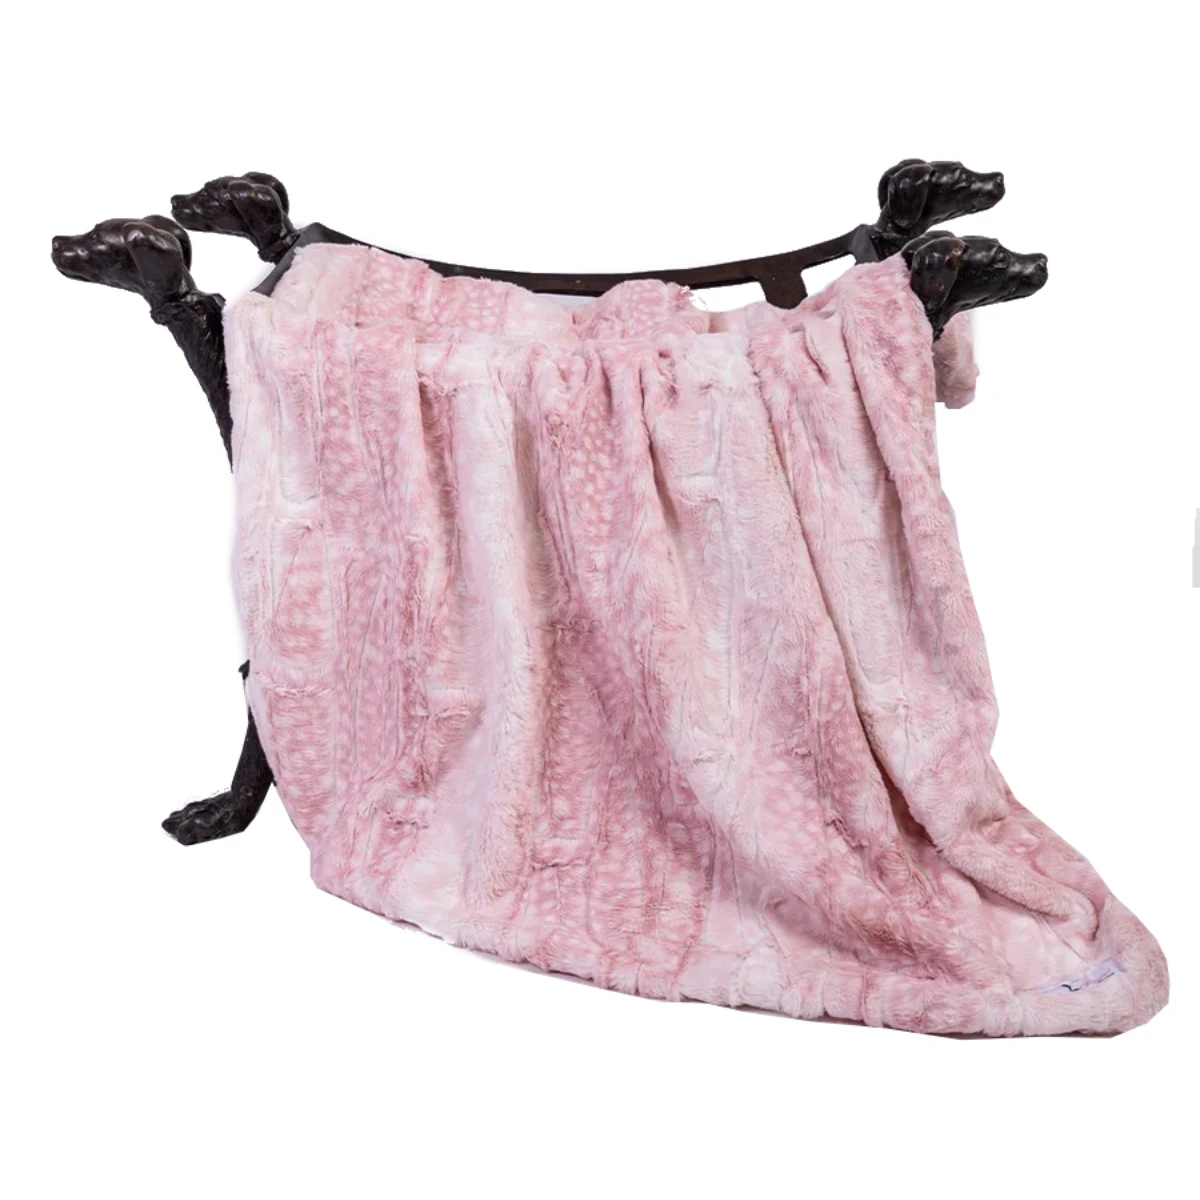 Hello Doggie Cashmere Dog Blanket - Pink Fawn